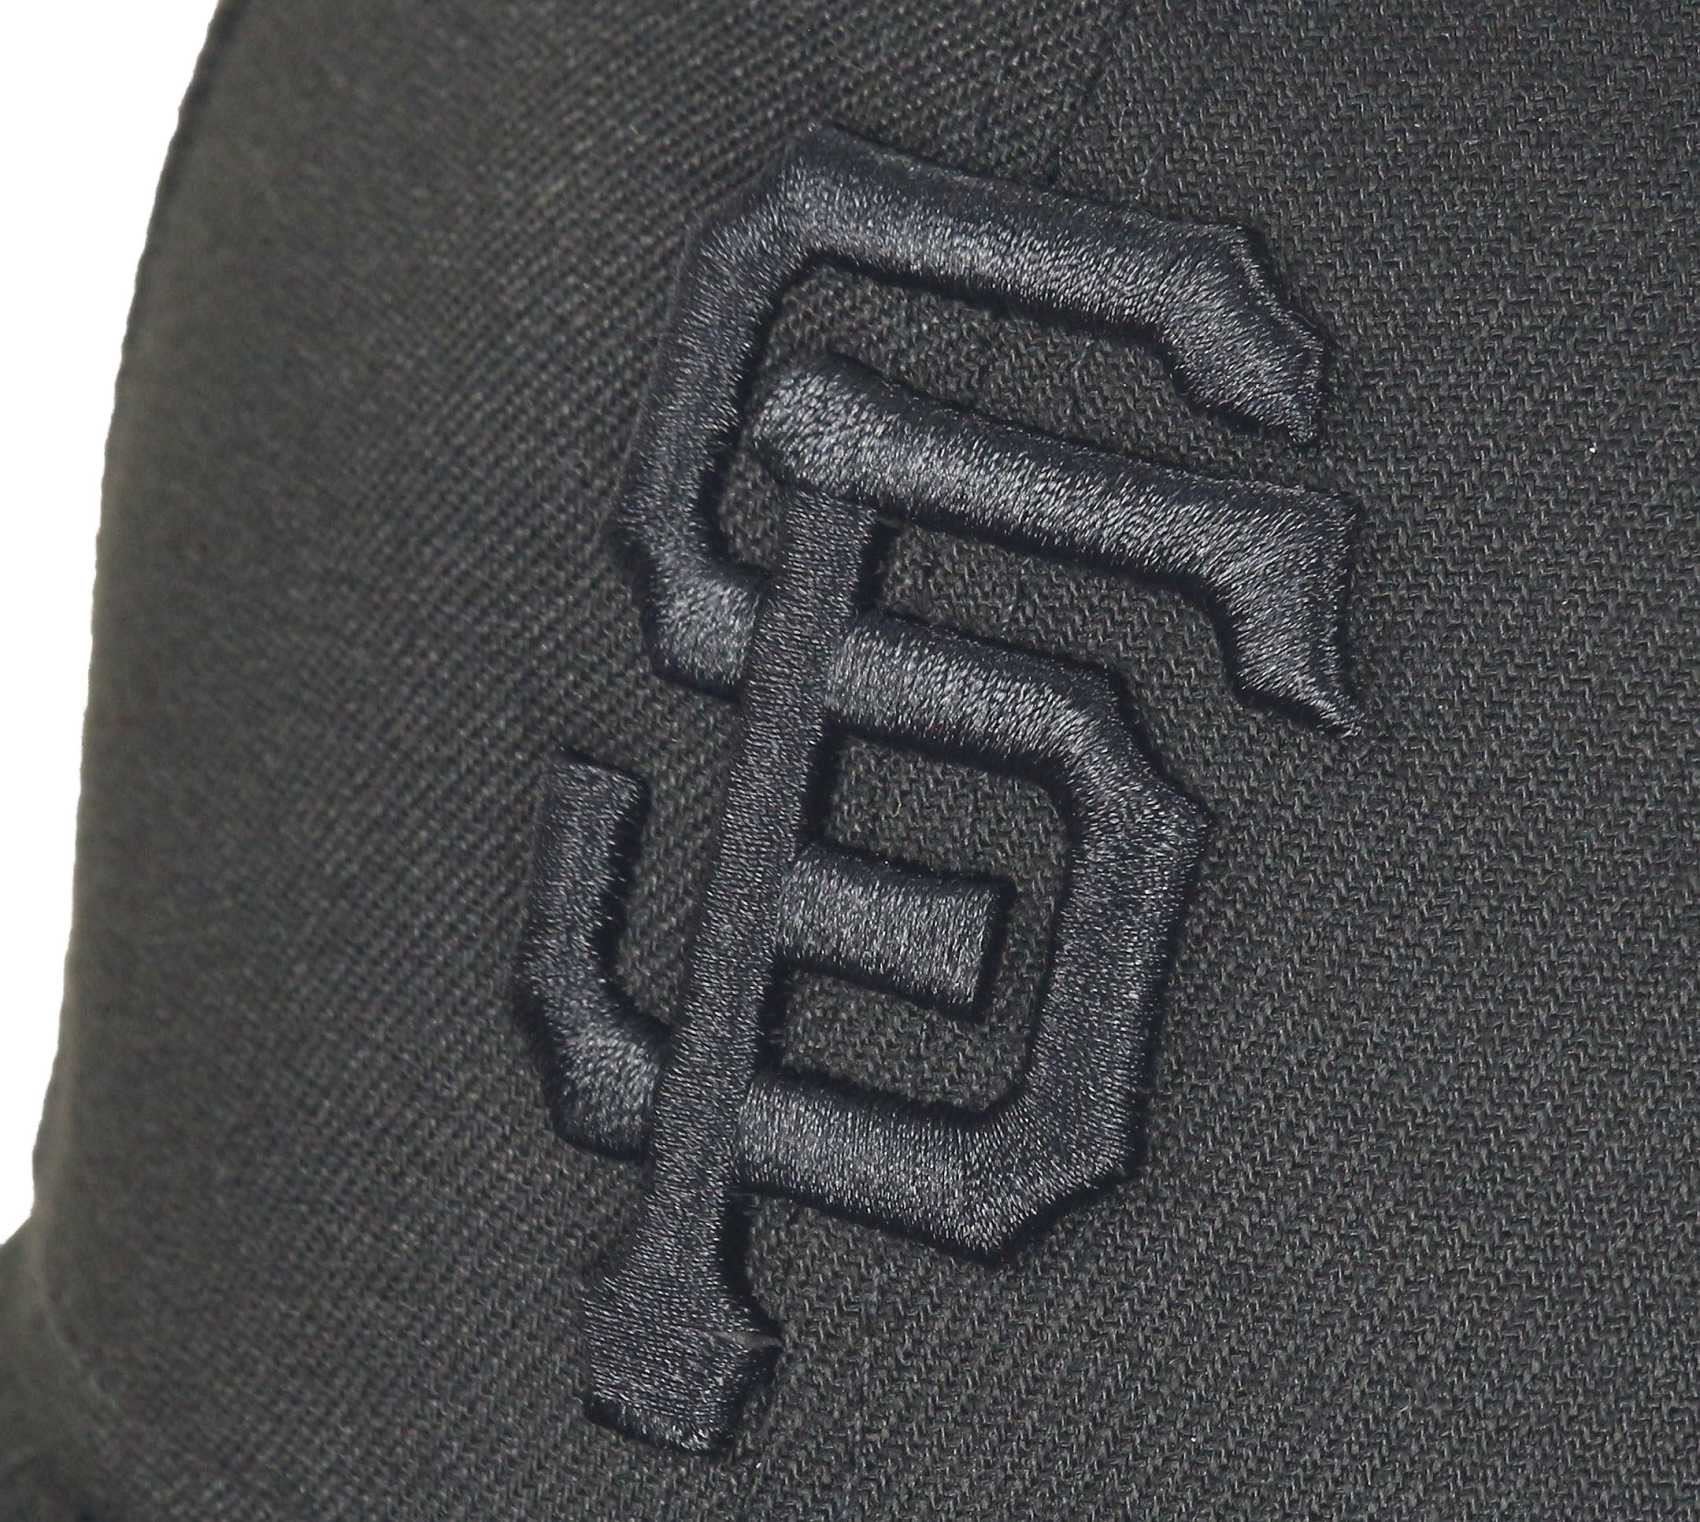 San Francisco Giants MLB Essential BoB 9Forty Adjustable Snapback Cap New Era 